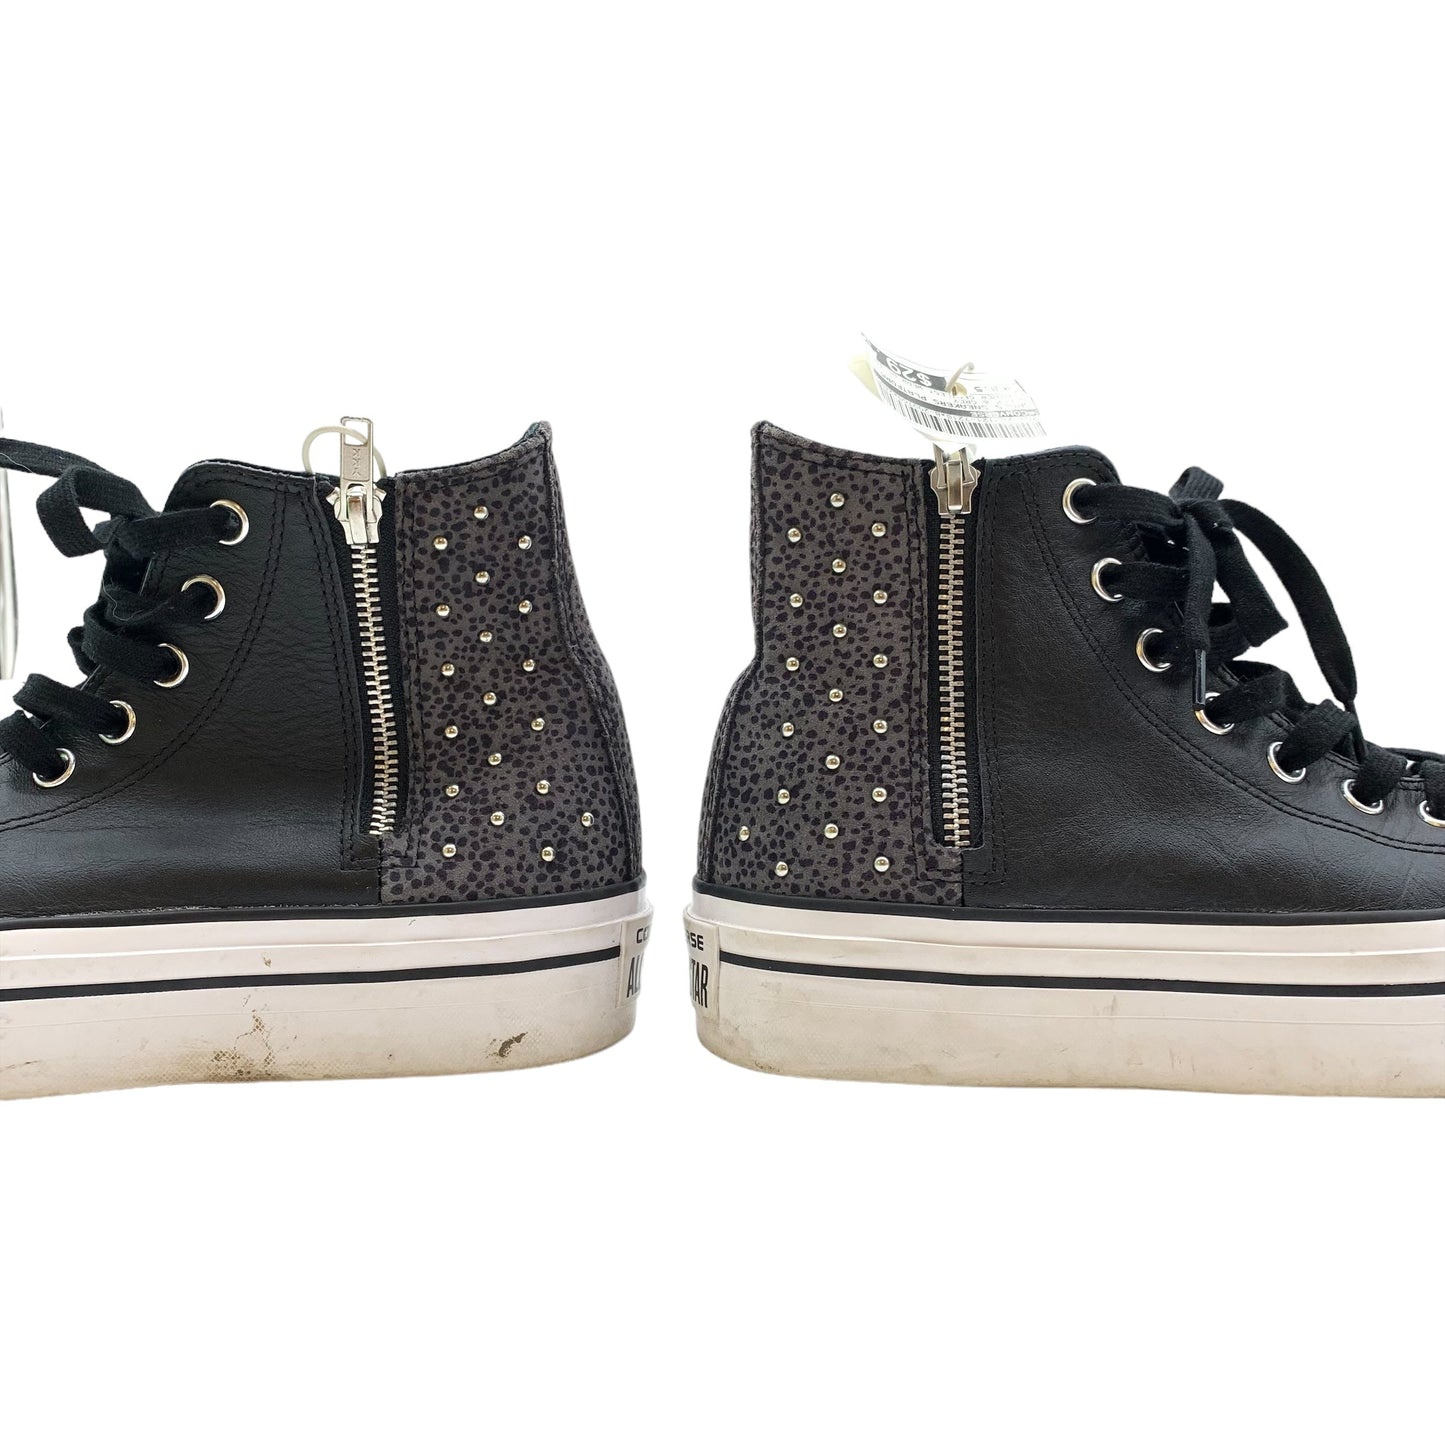 Black & Grey Shoes Sneakers Platform Converse, Size 8.5